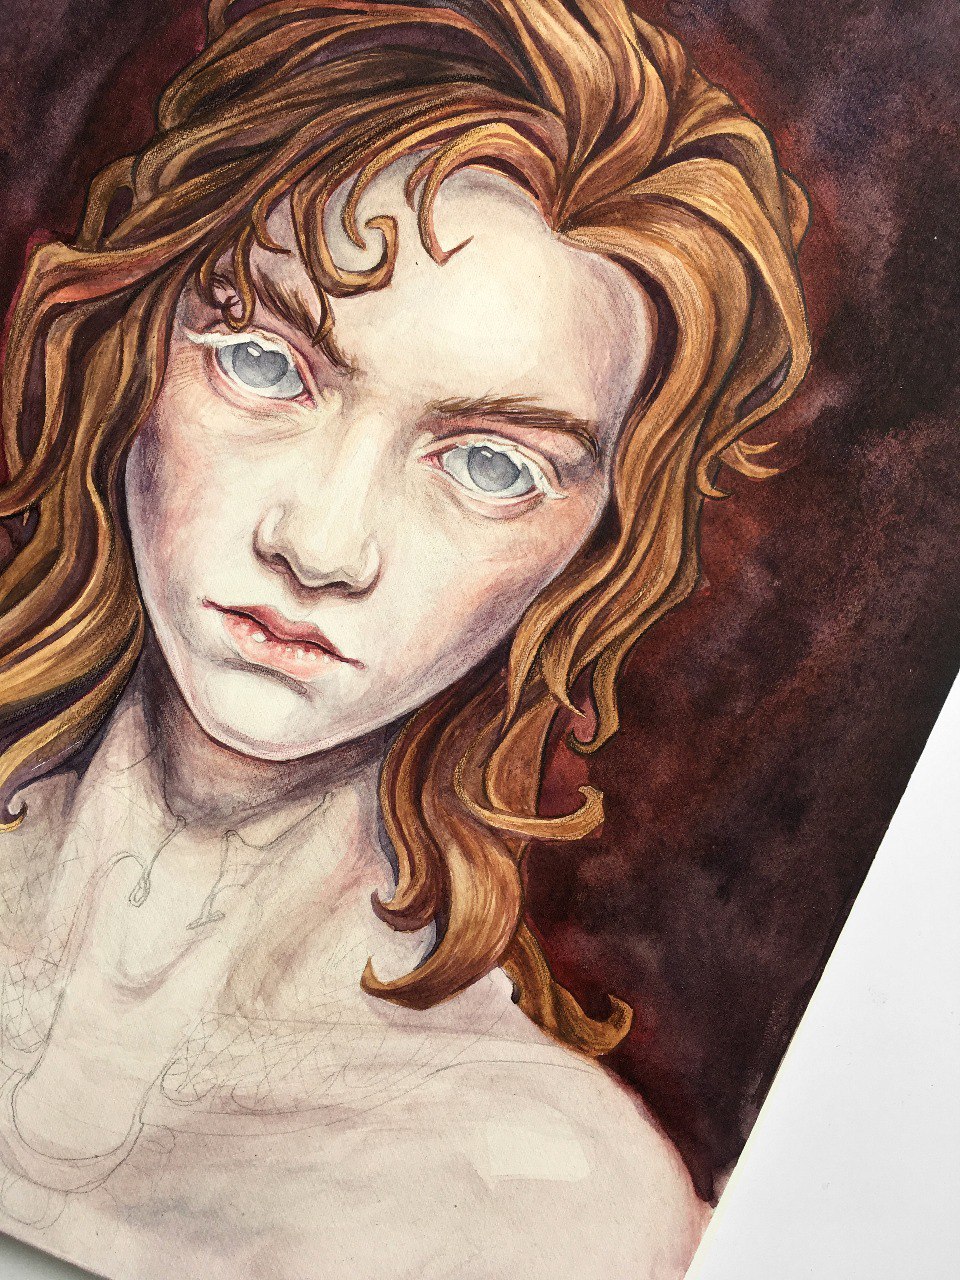 Women's portrait in watercolor and gilding